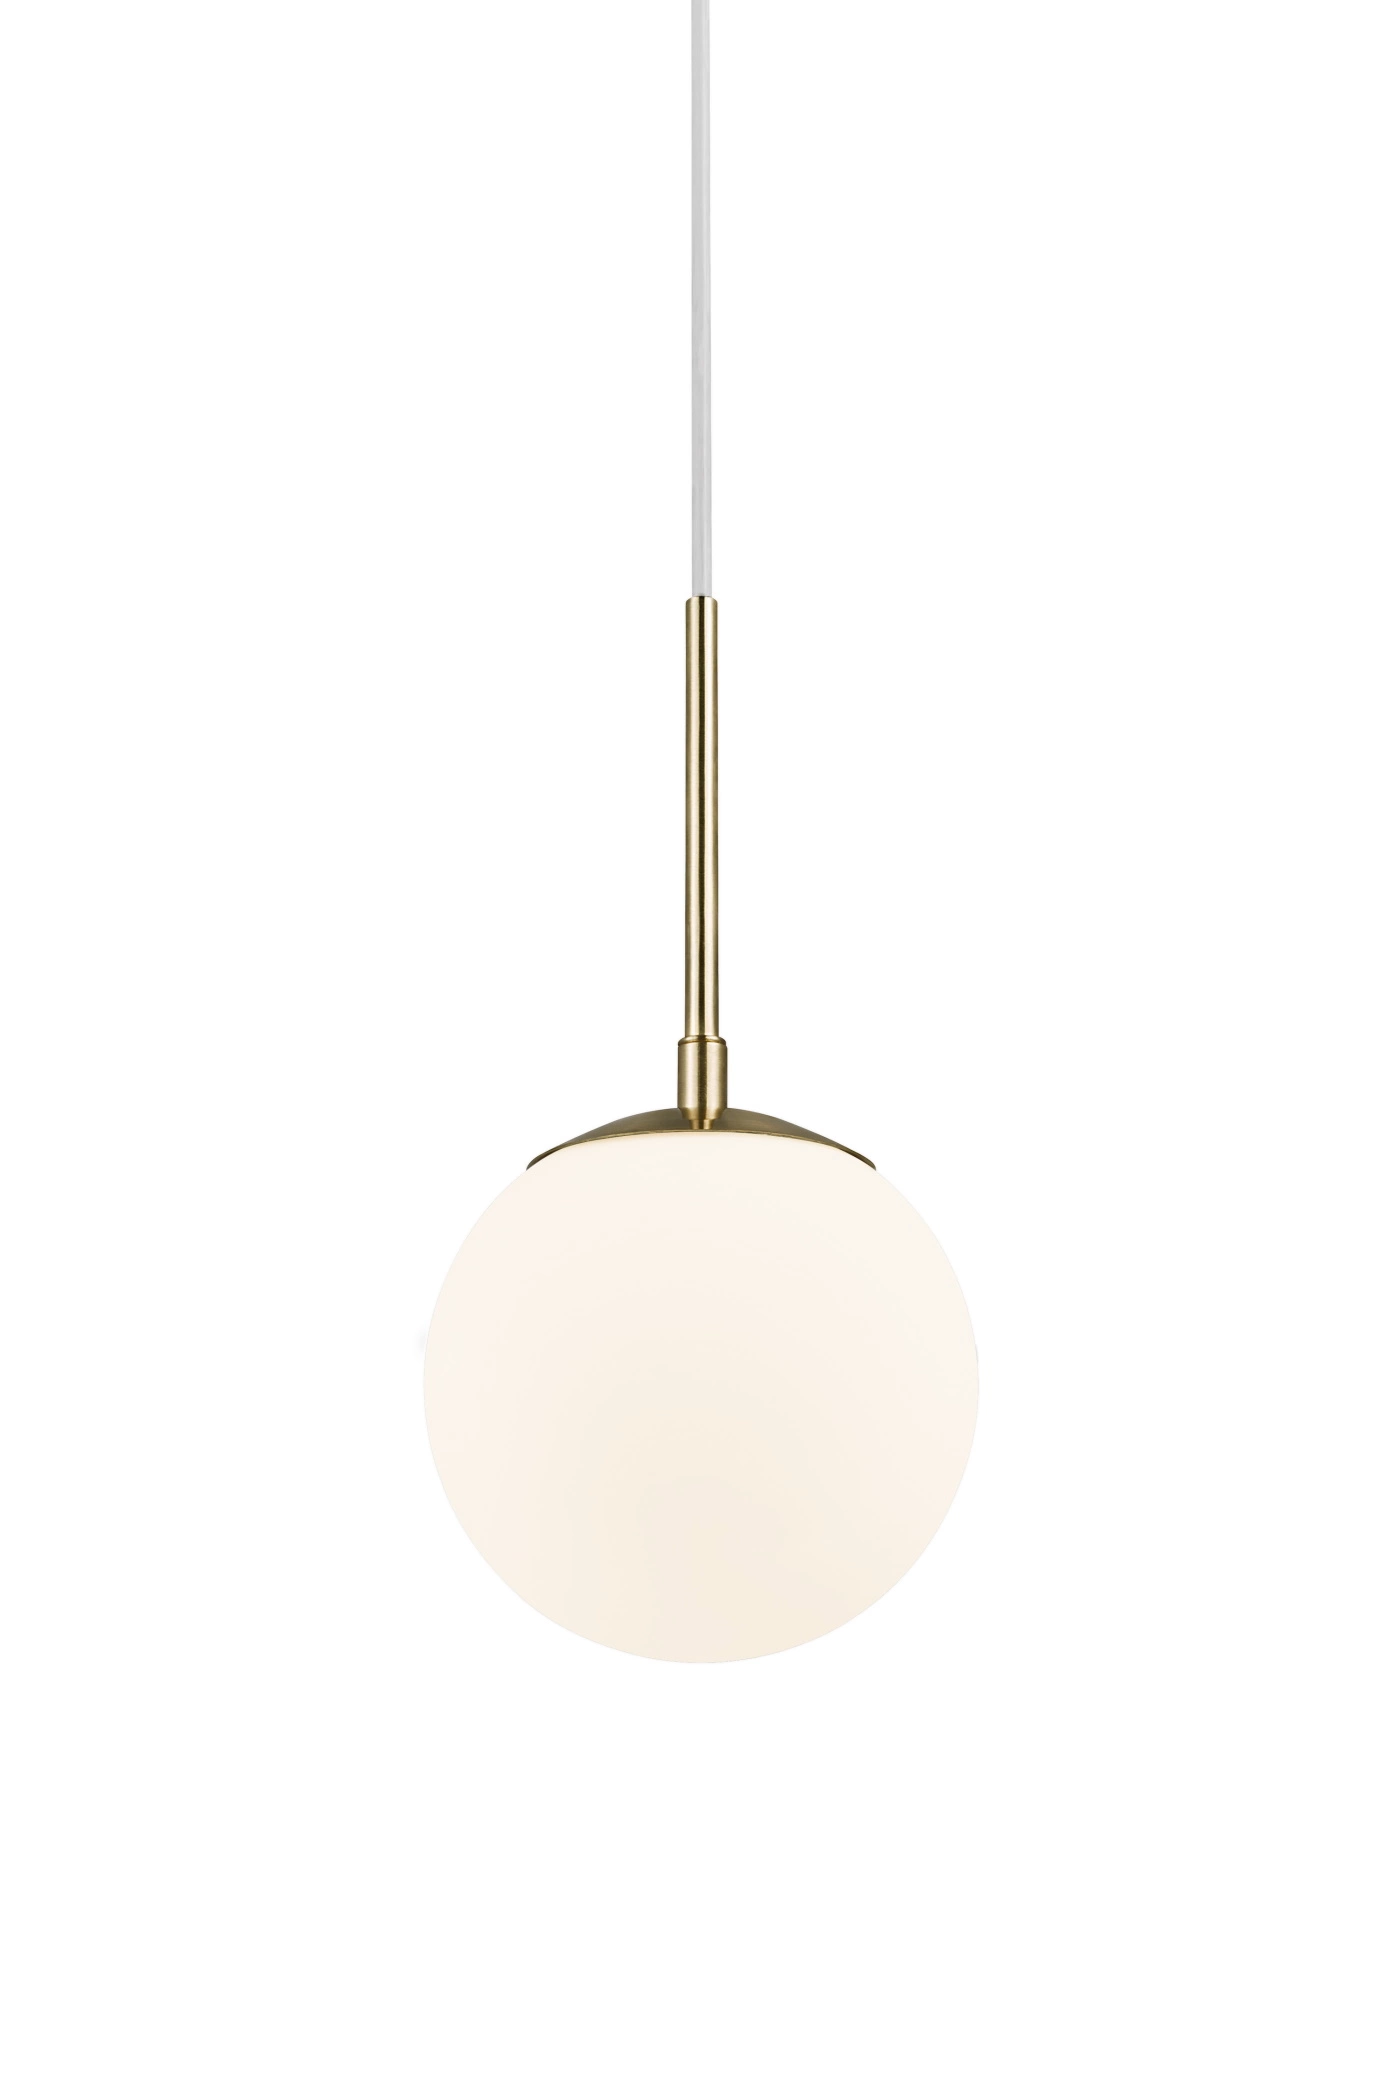   
                        Люстра NORDLUX  (Дания) 51220    
                         в стиле модерн.  
                        Тип источника света: светодиодные led, энергосберегающие, накаливания.                         Форма: шар.                         Цвета плафонов и подвесок: белый.                         Материал: стекло.                          фото 2